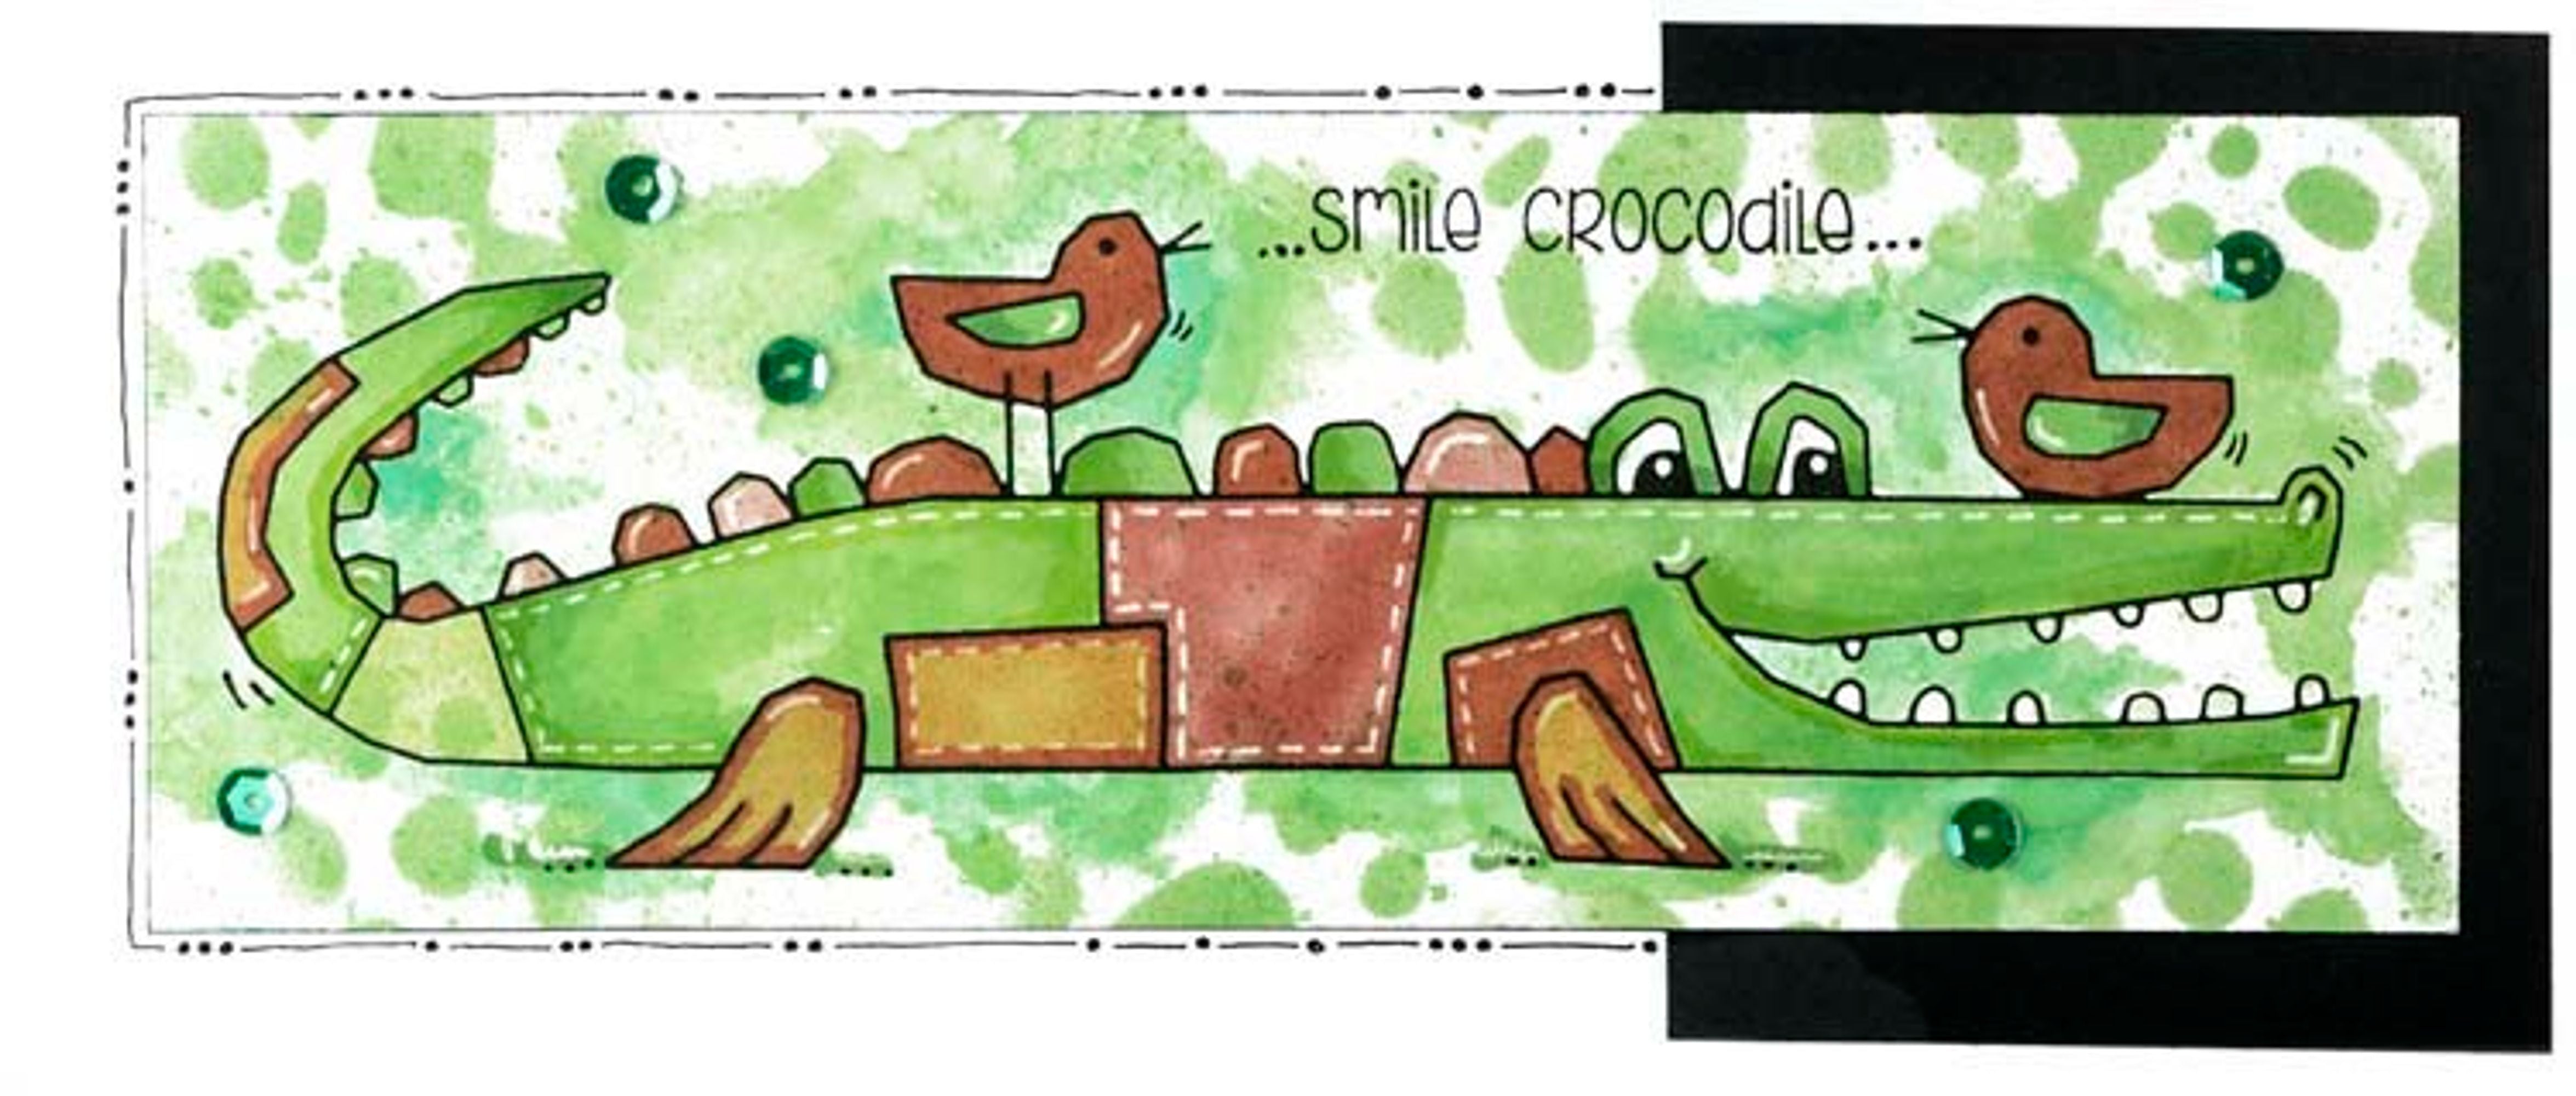 Woodware Clear Singles Smile Crocodile